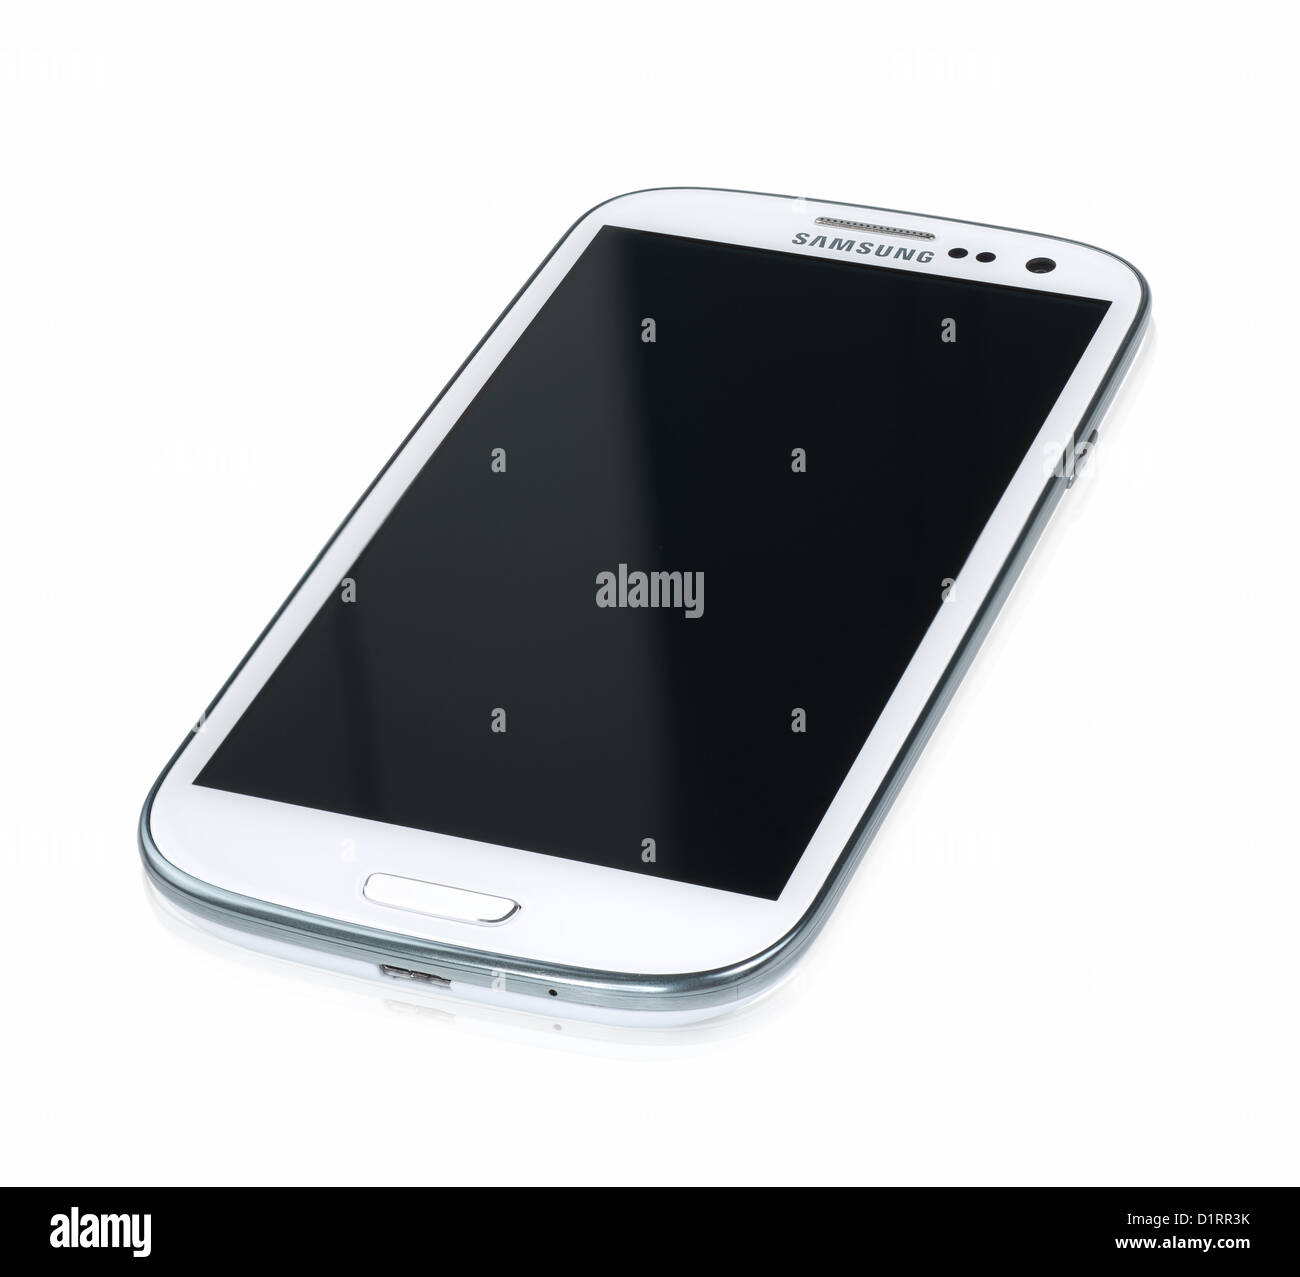 Samsung Galaxy S3 smart phone product image - white Stock Photo